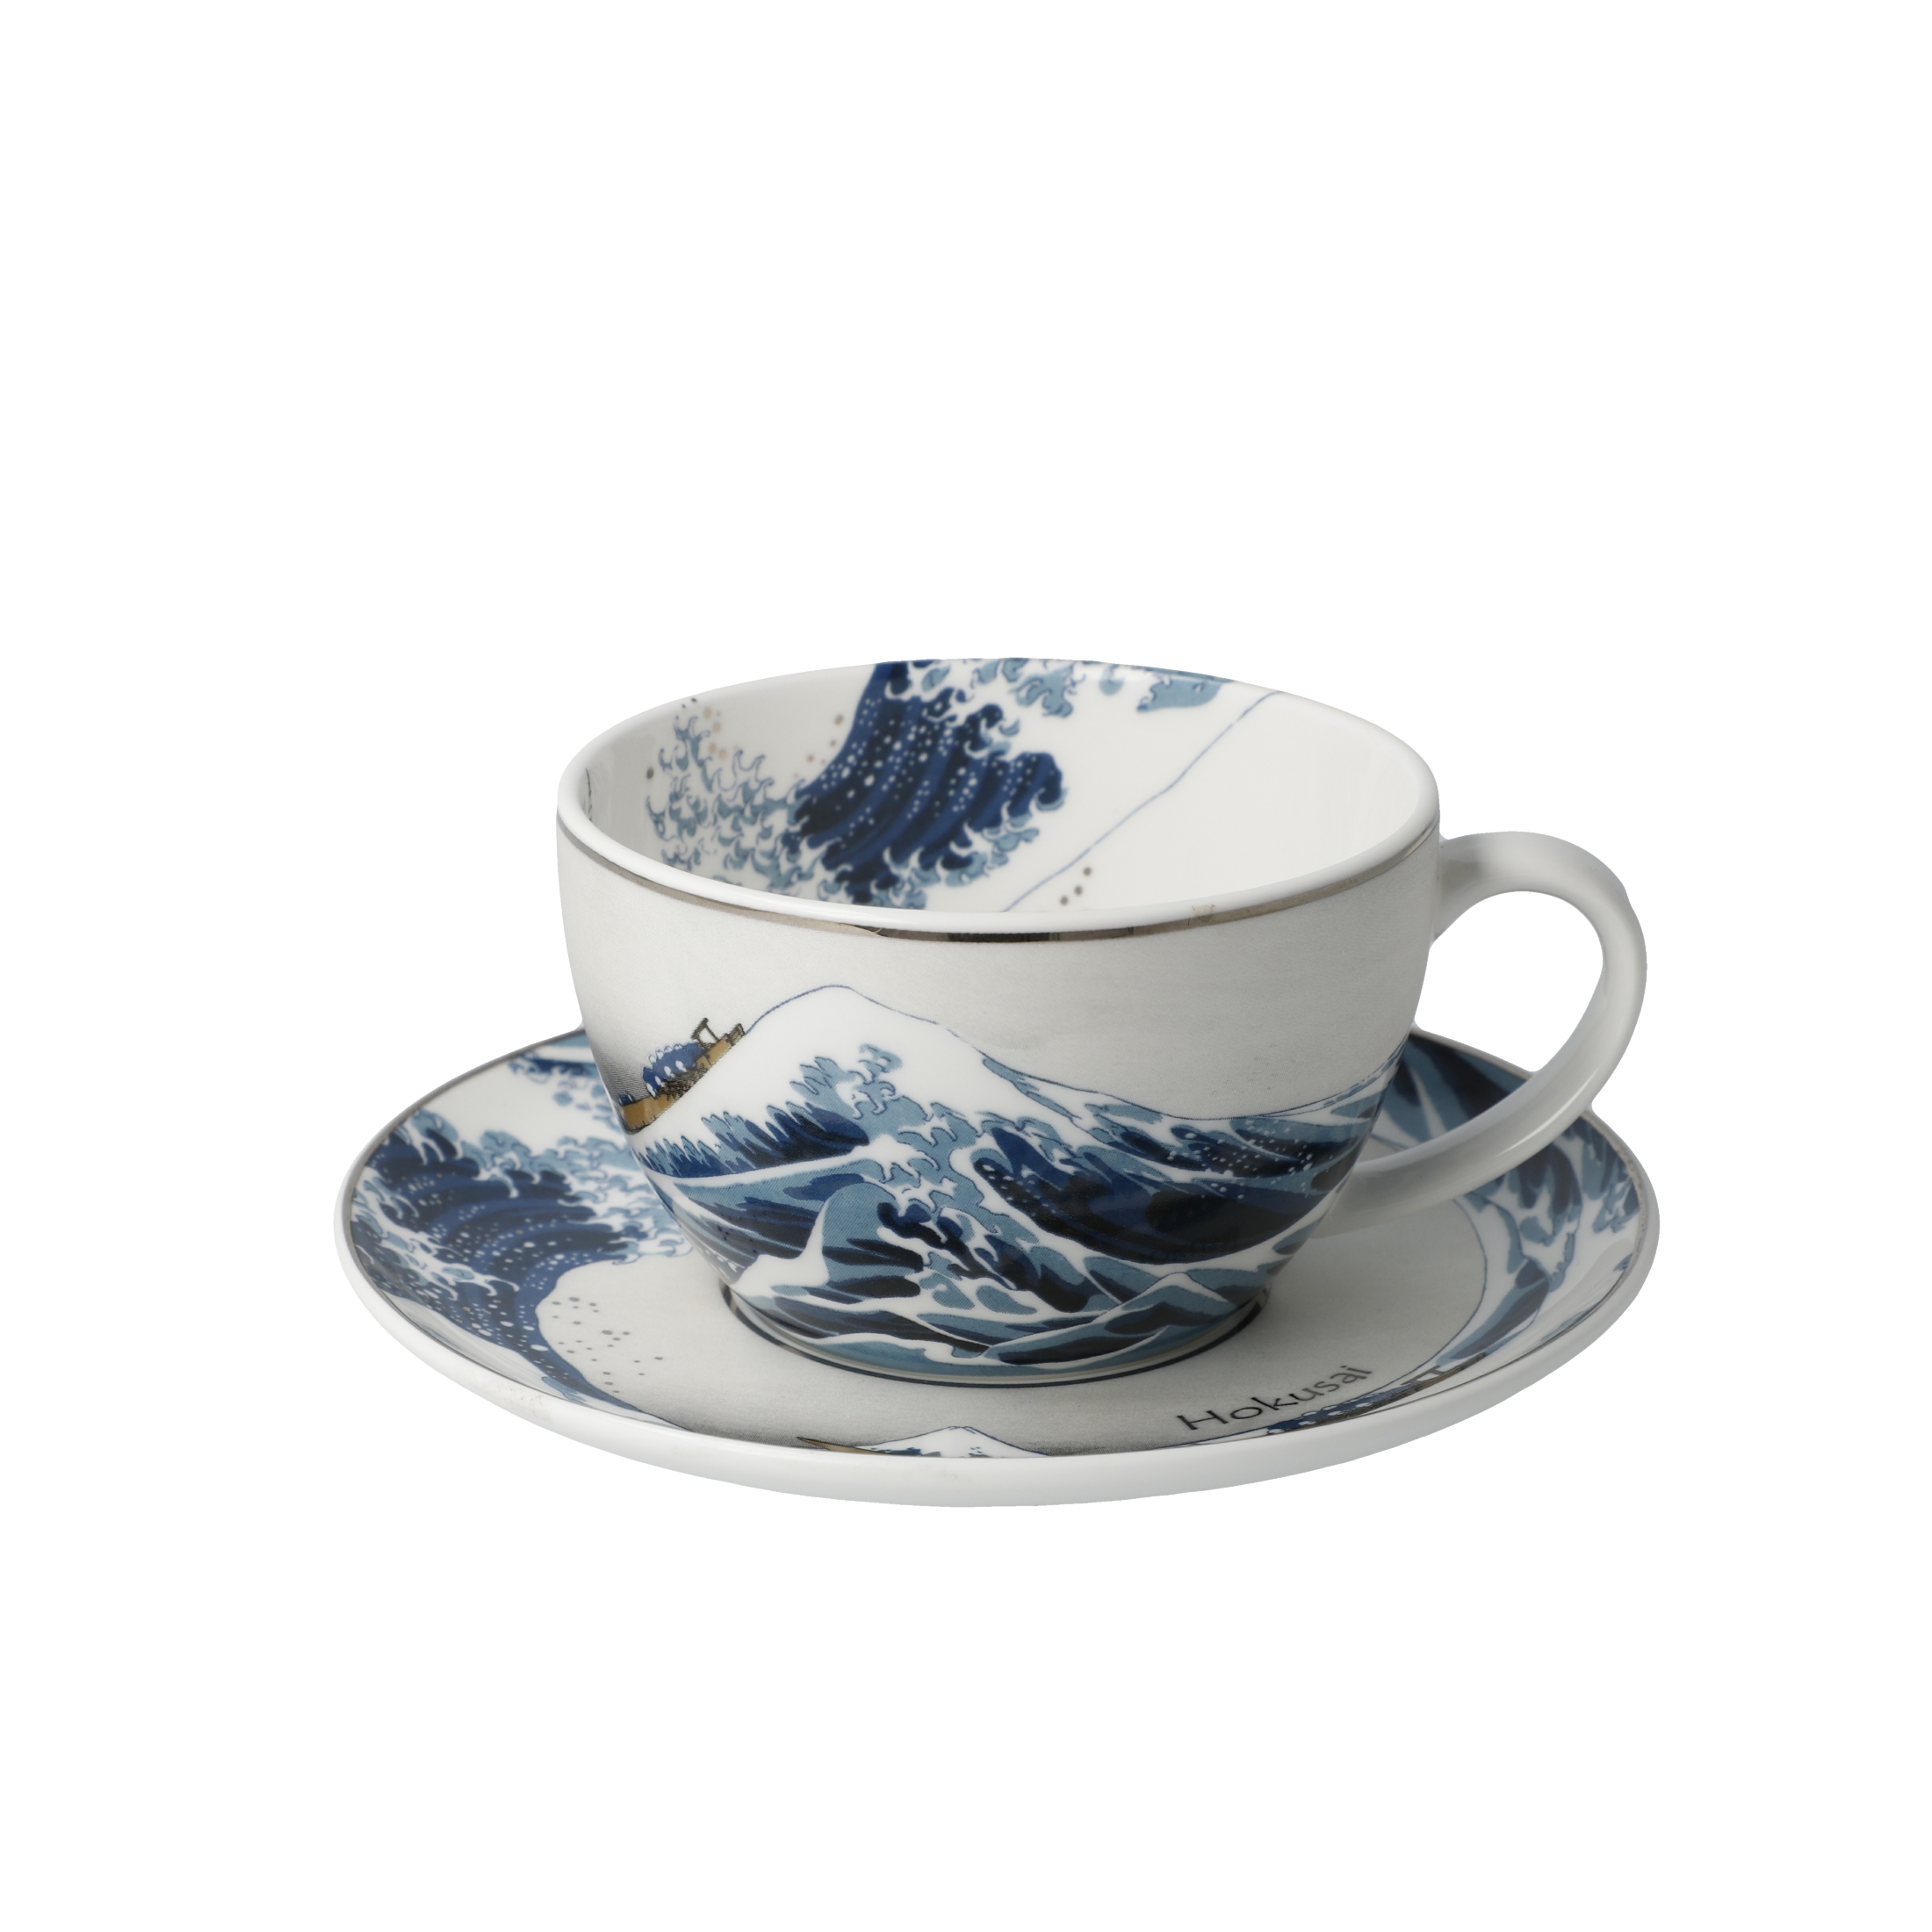 The Great Wave - Tea or Cappuccino Cup with Saucer Artis Orbis Katsushika Hokusai